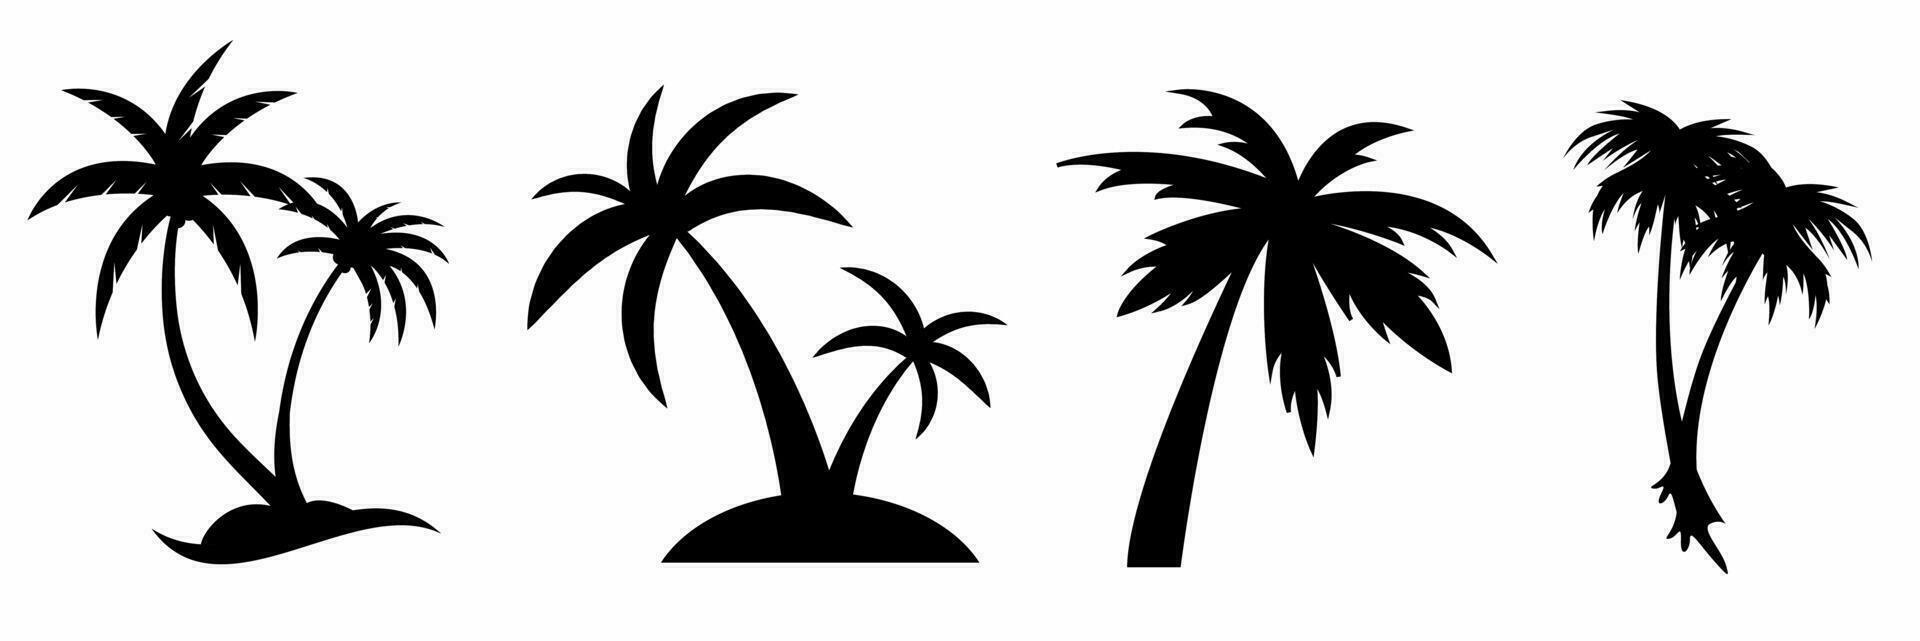 Icon design. Coconut tree icon illustration collection. vector